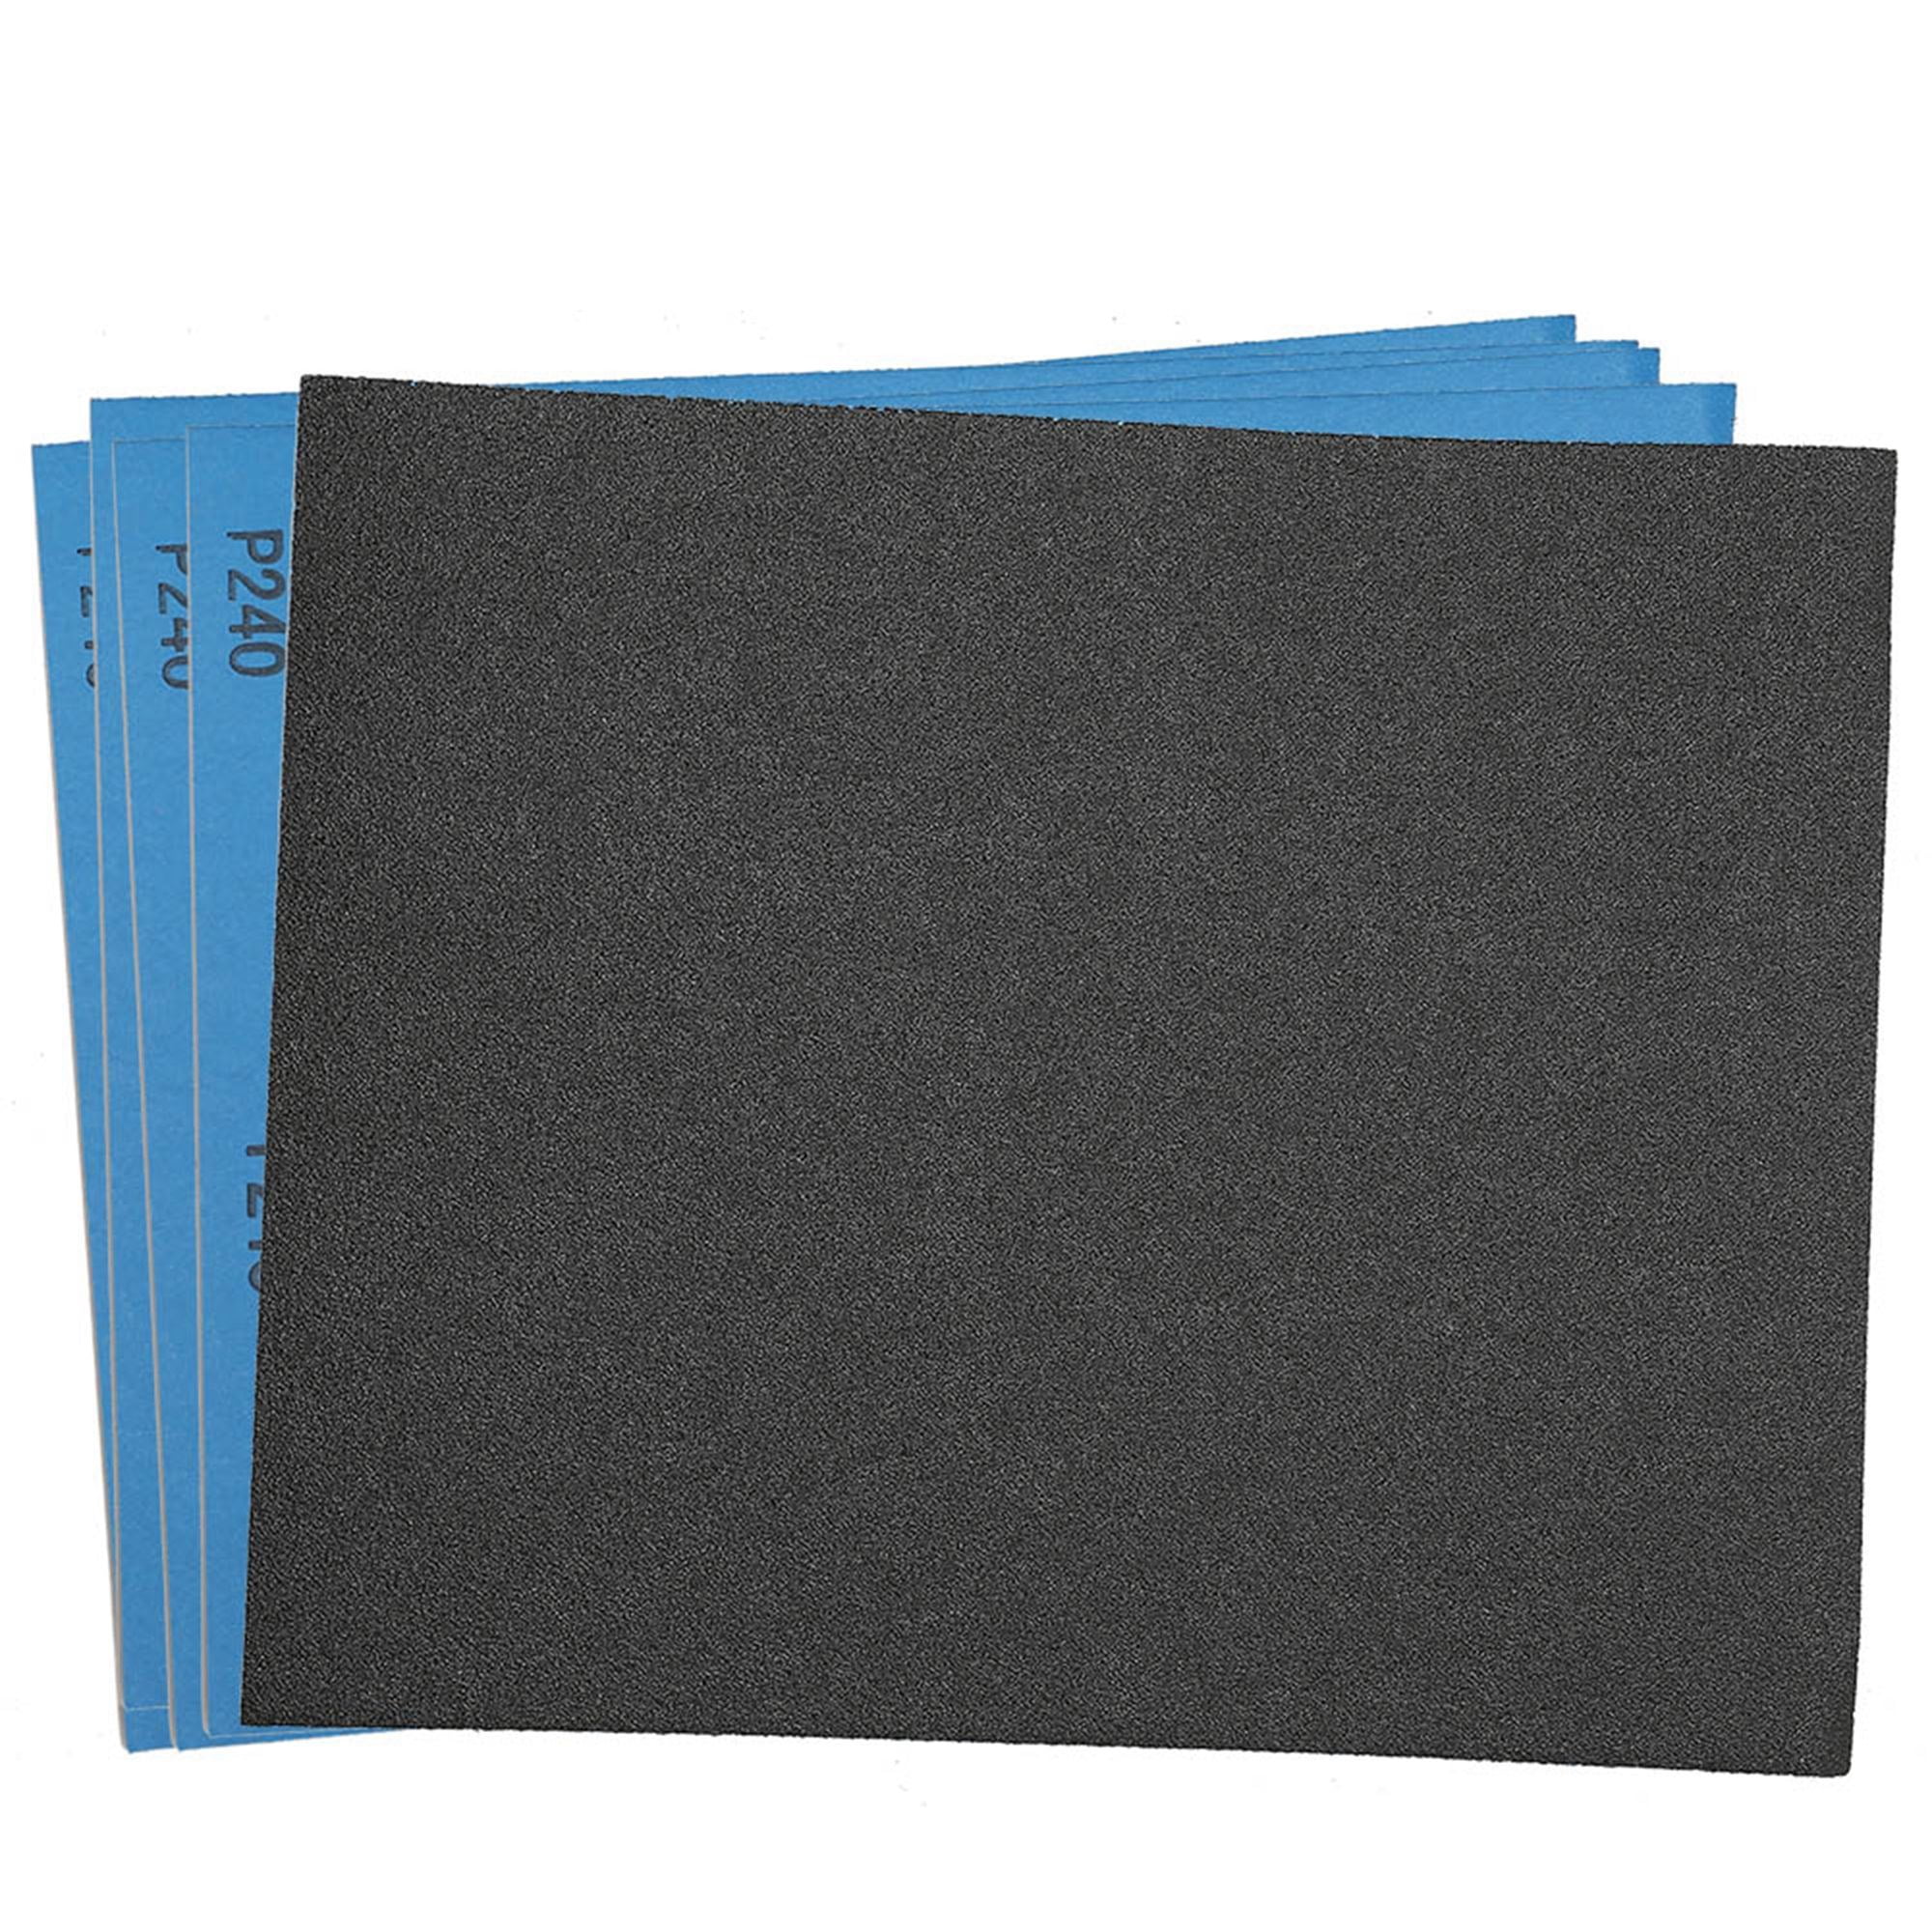 10 pcs Hi Quality Abrasive Paper Sandpaper 1500 Grit 9" x 11" Wet Dry Waterproof 